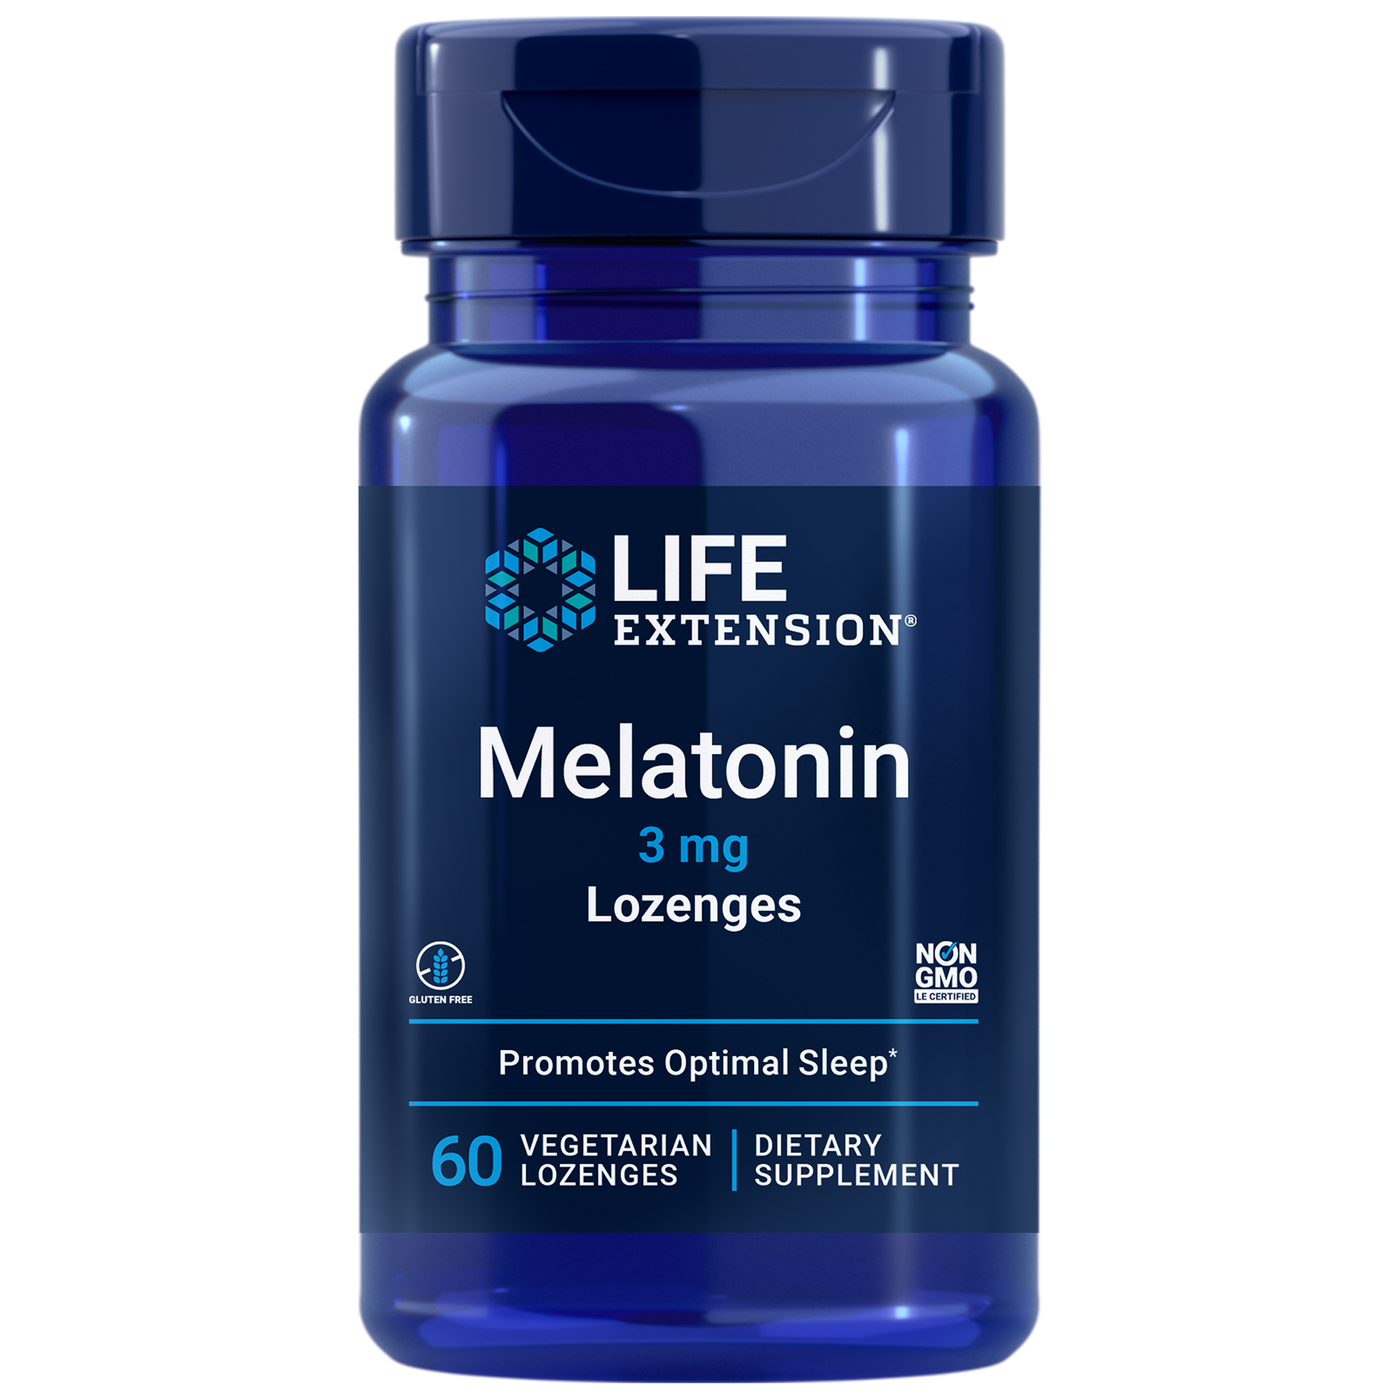 Melatonin 3 mg enges Curated Wellness